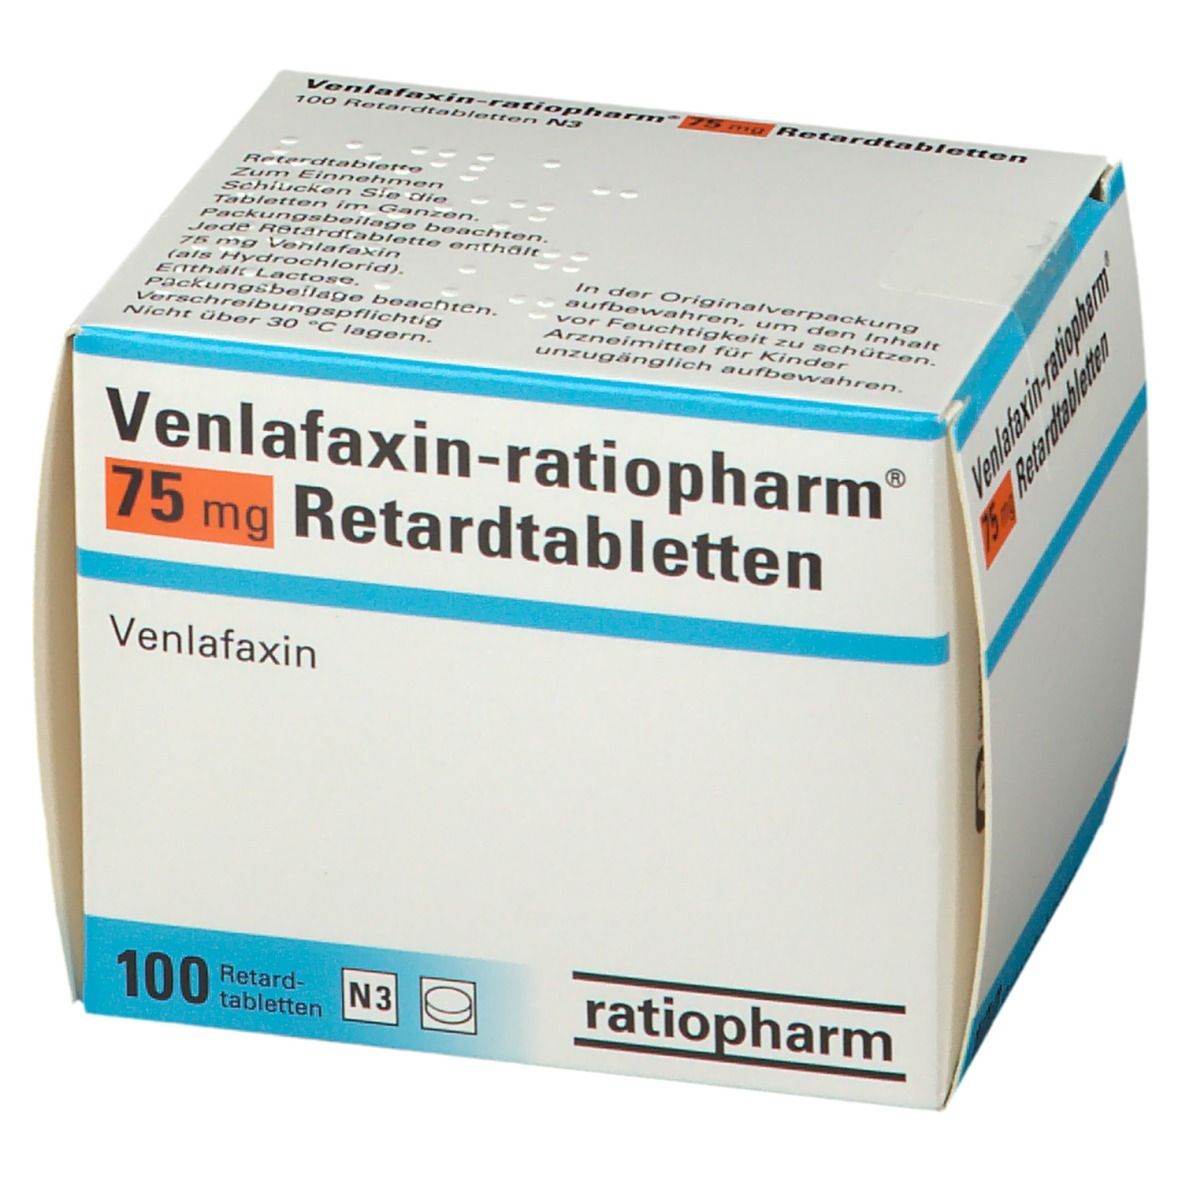 Venlafaxin-ratiopharm® 75 mg